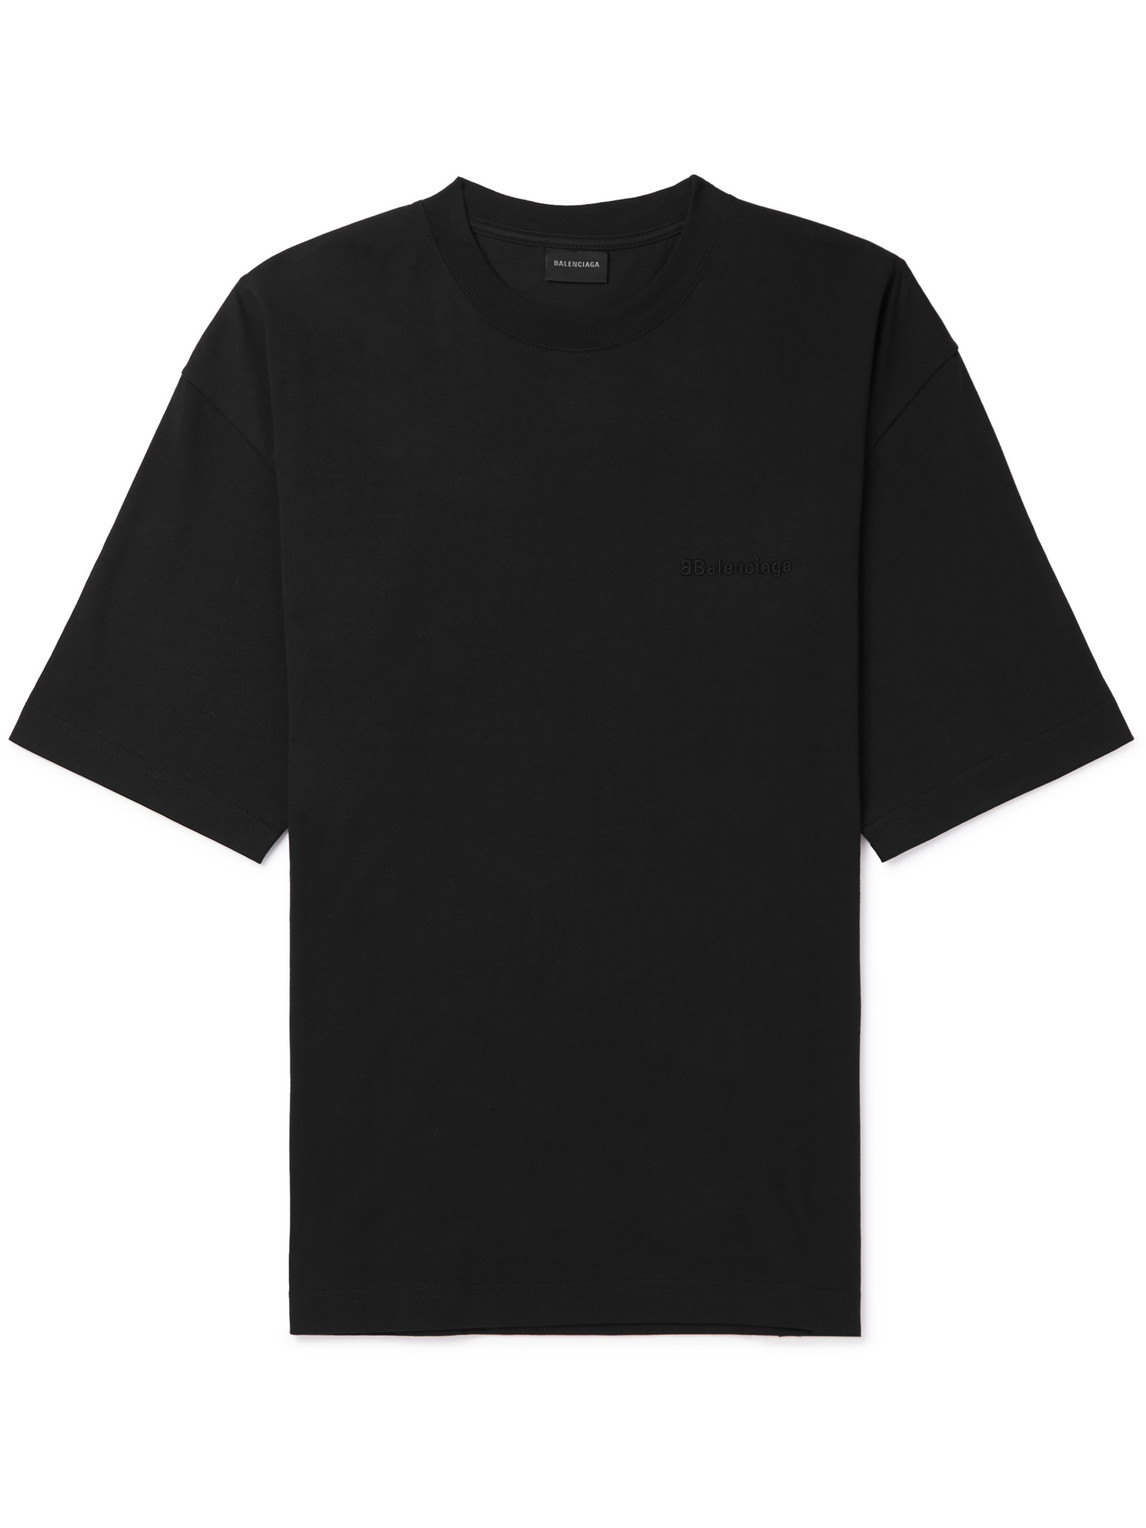 Balenciaga Black Embroidered T-shirt